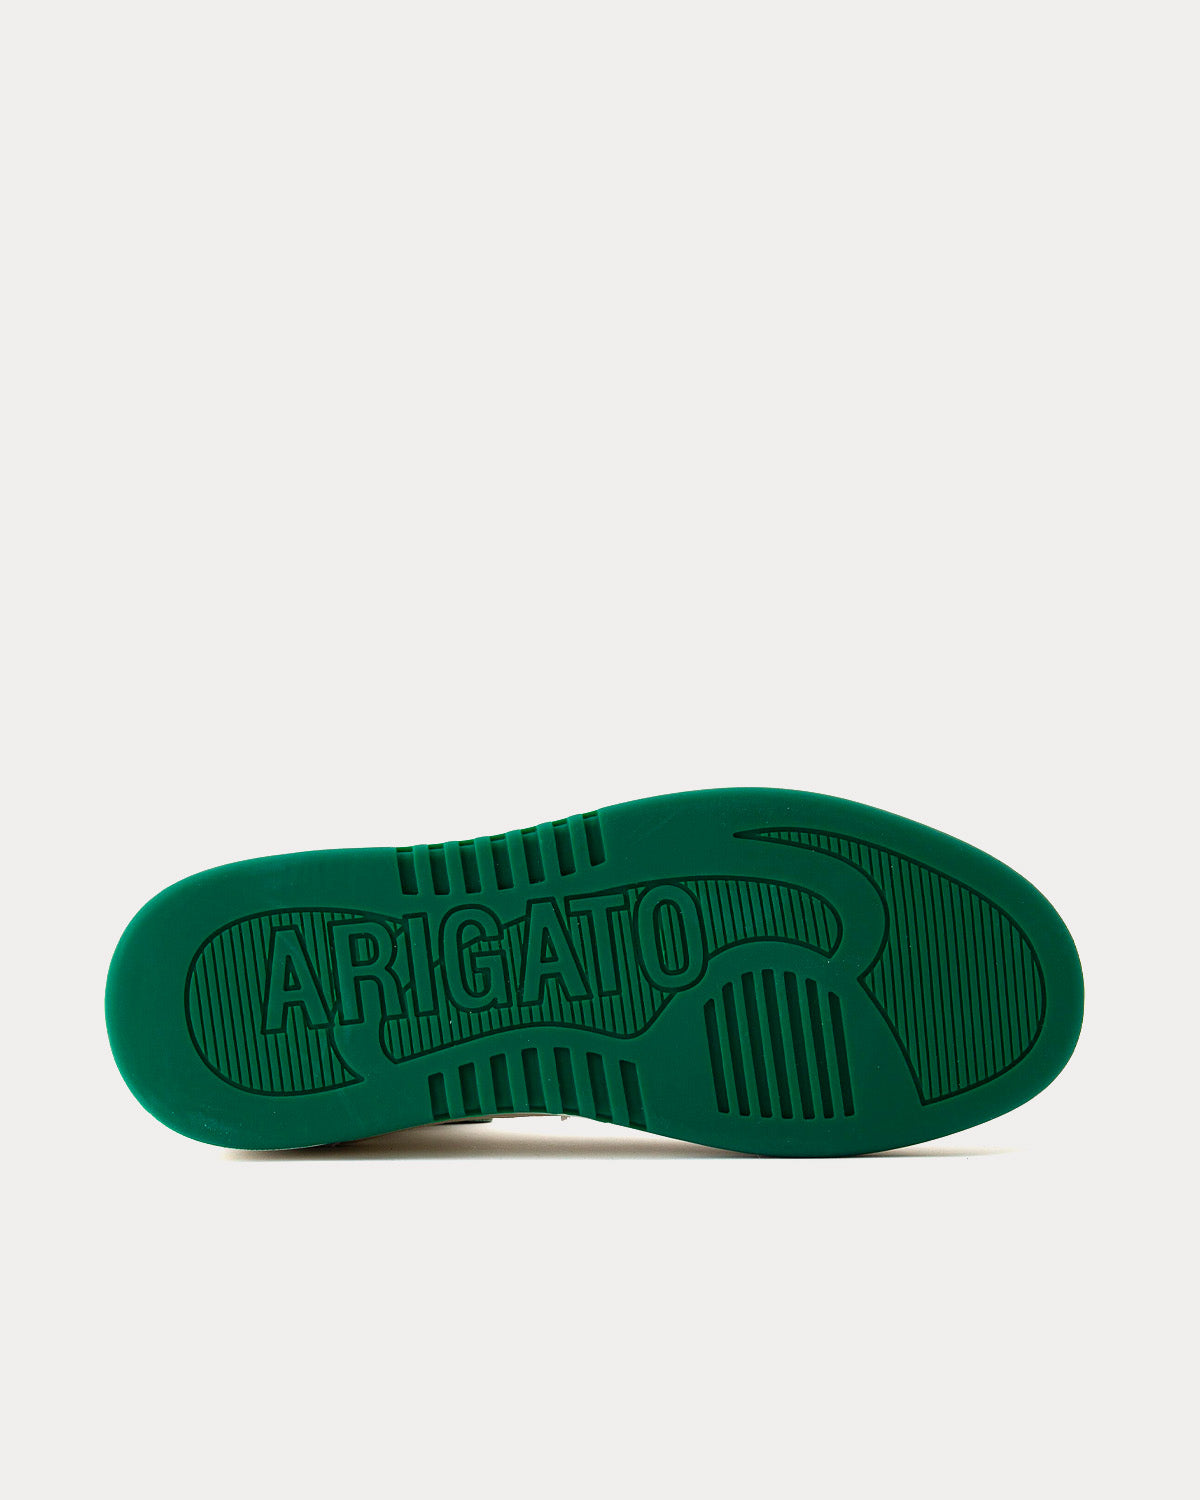 Axel Arigato - A-Dice Hi White / Kale Green High Top Sneakers